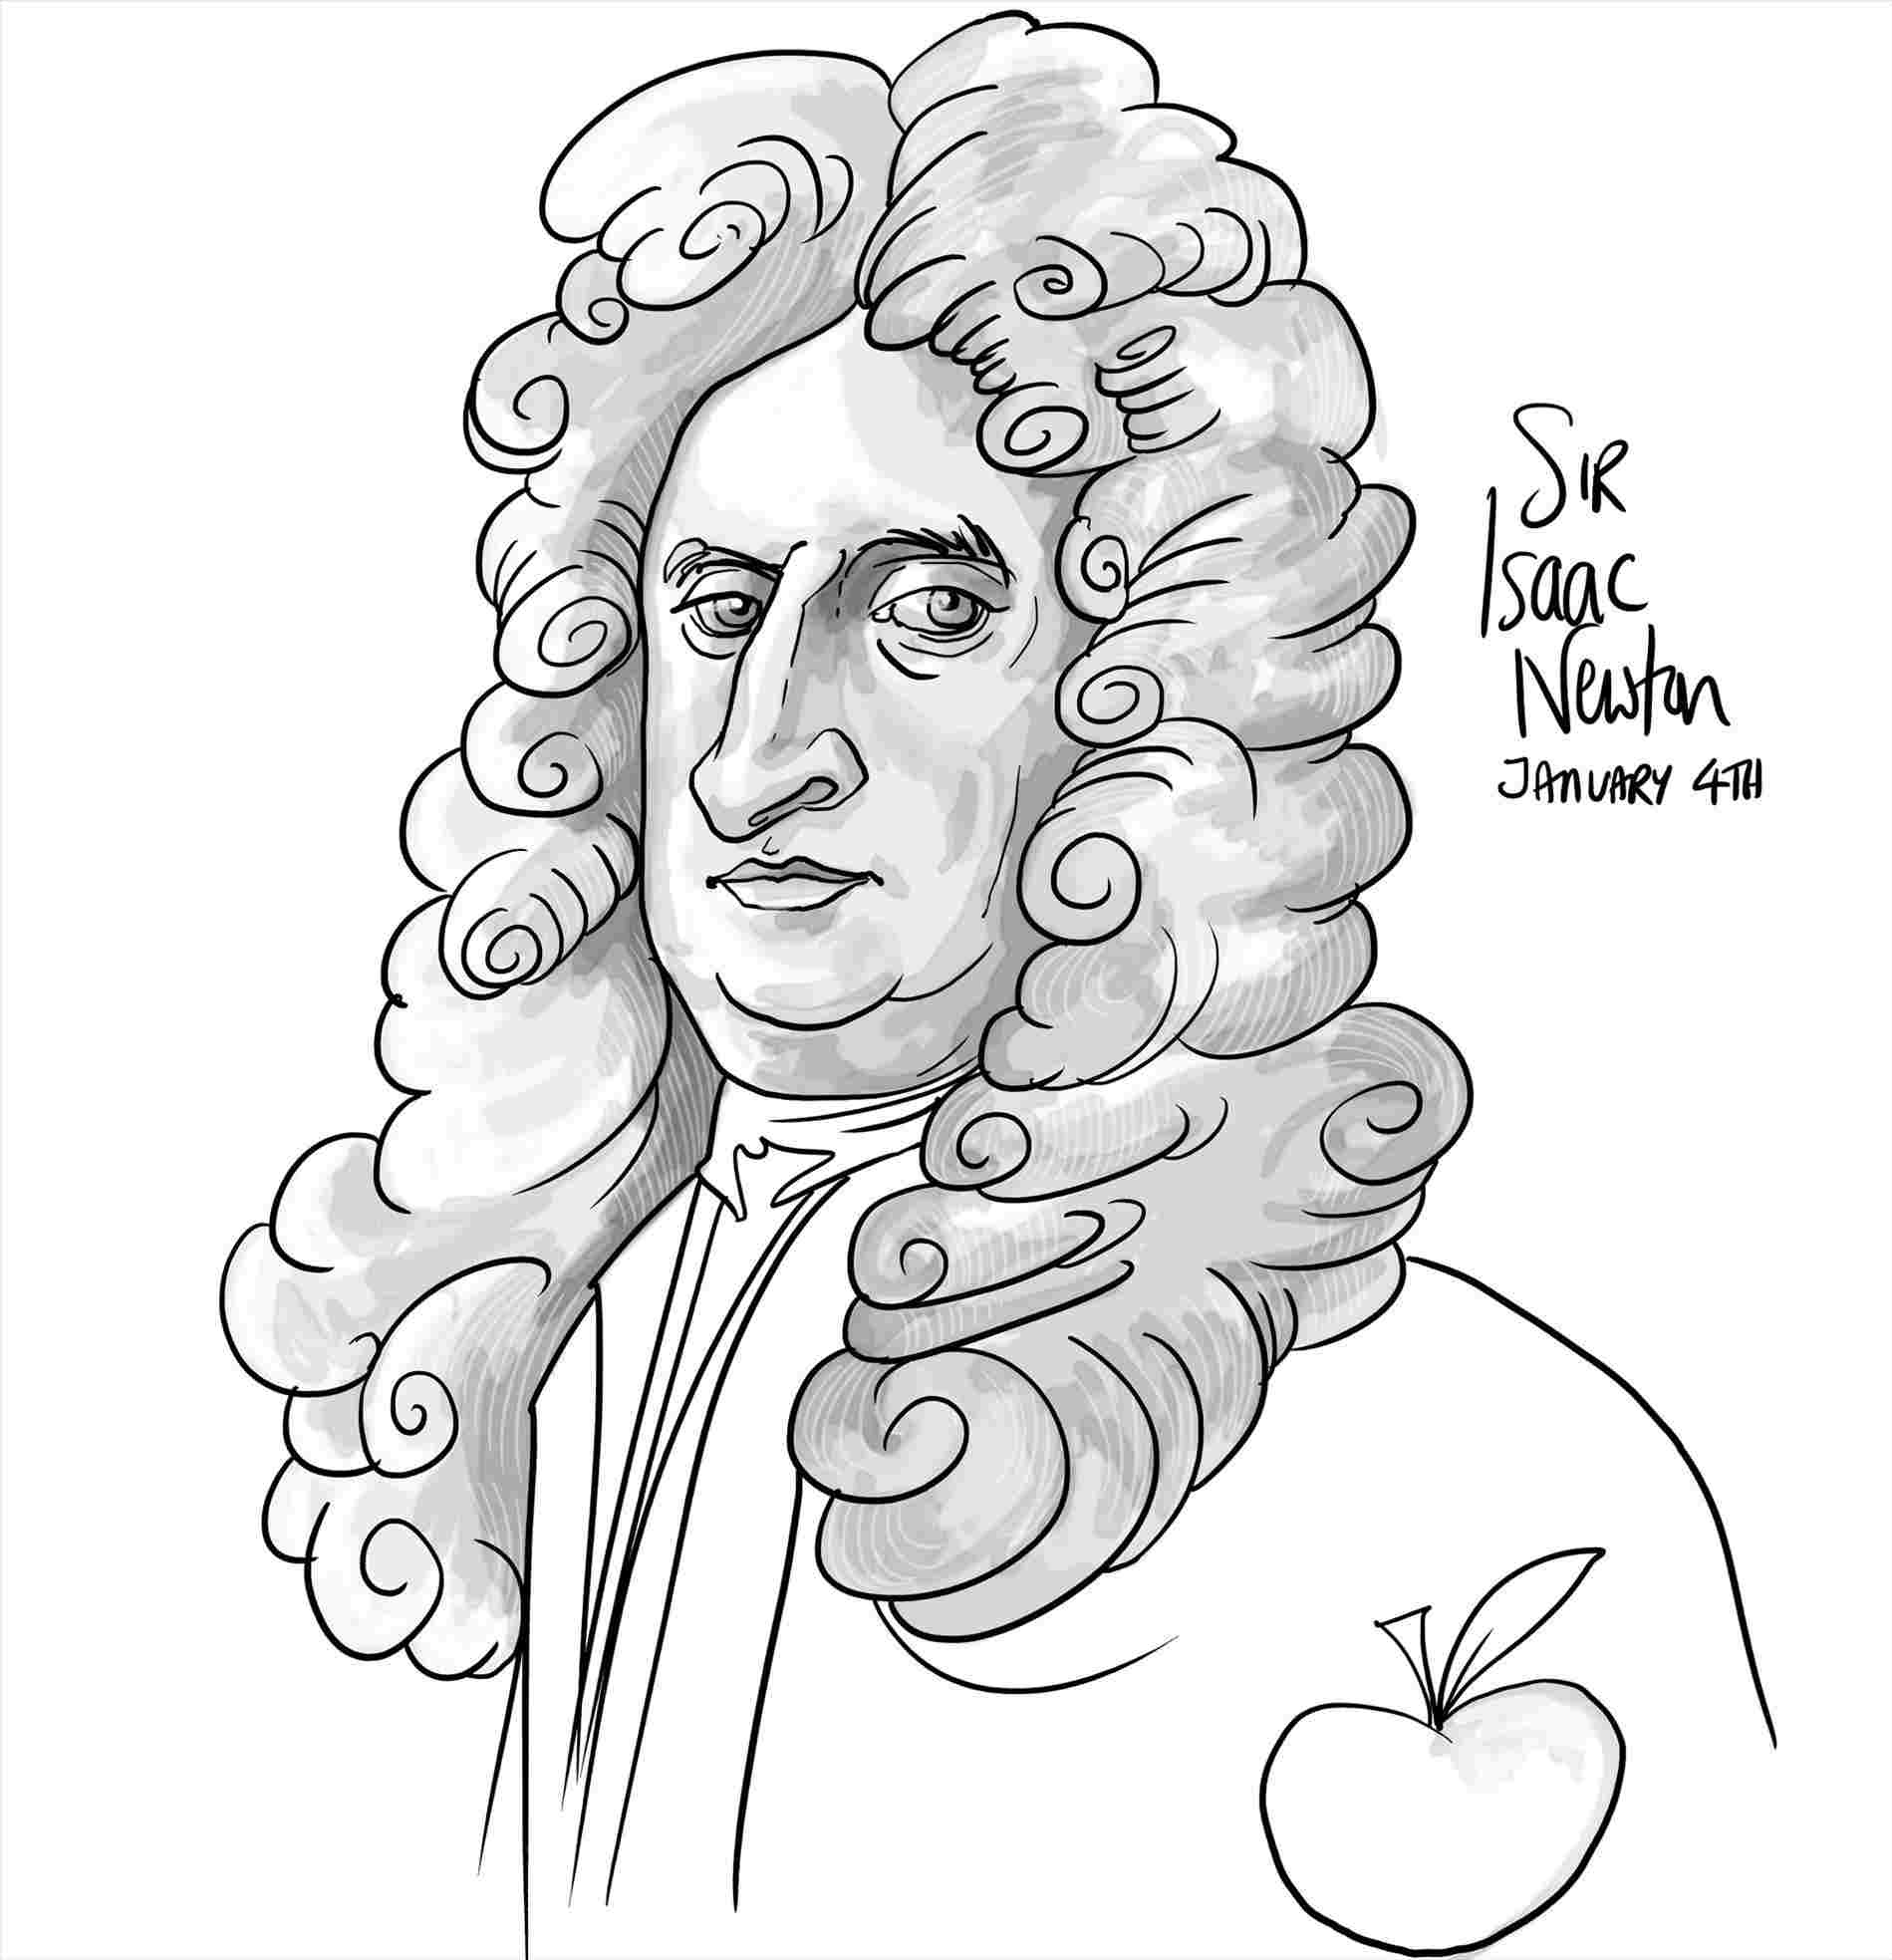 Sir Isaac Newton Drawing at Explore collection of